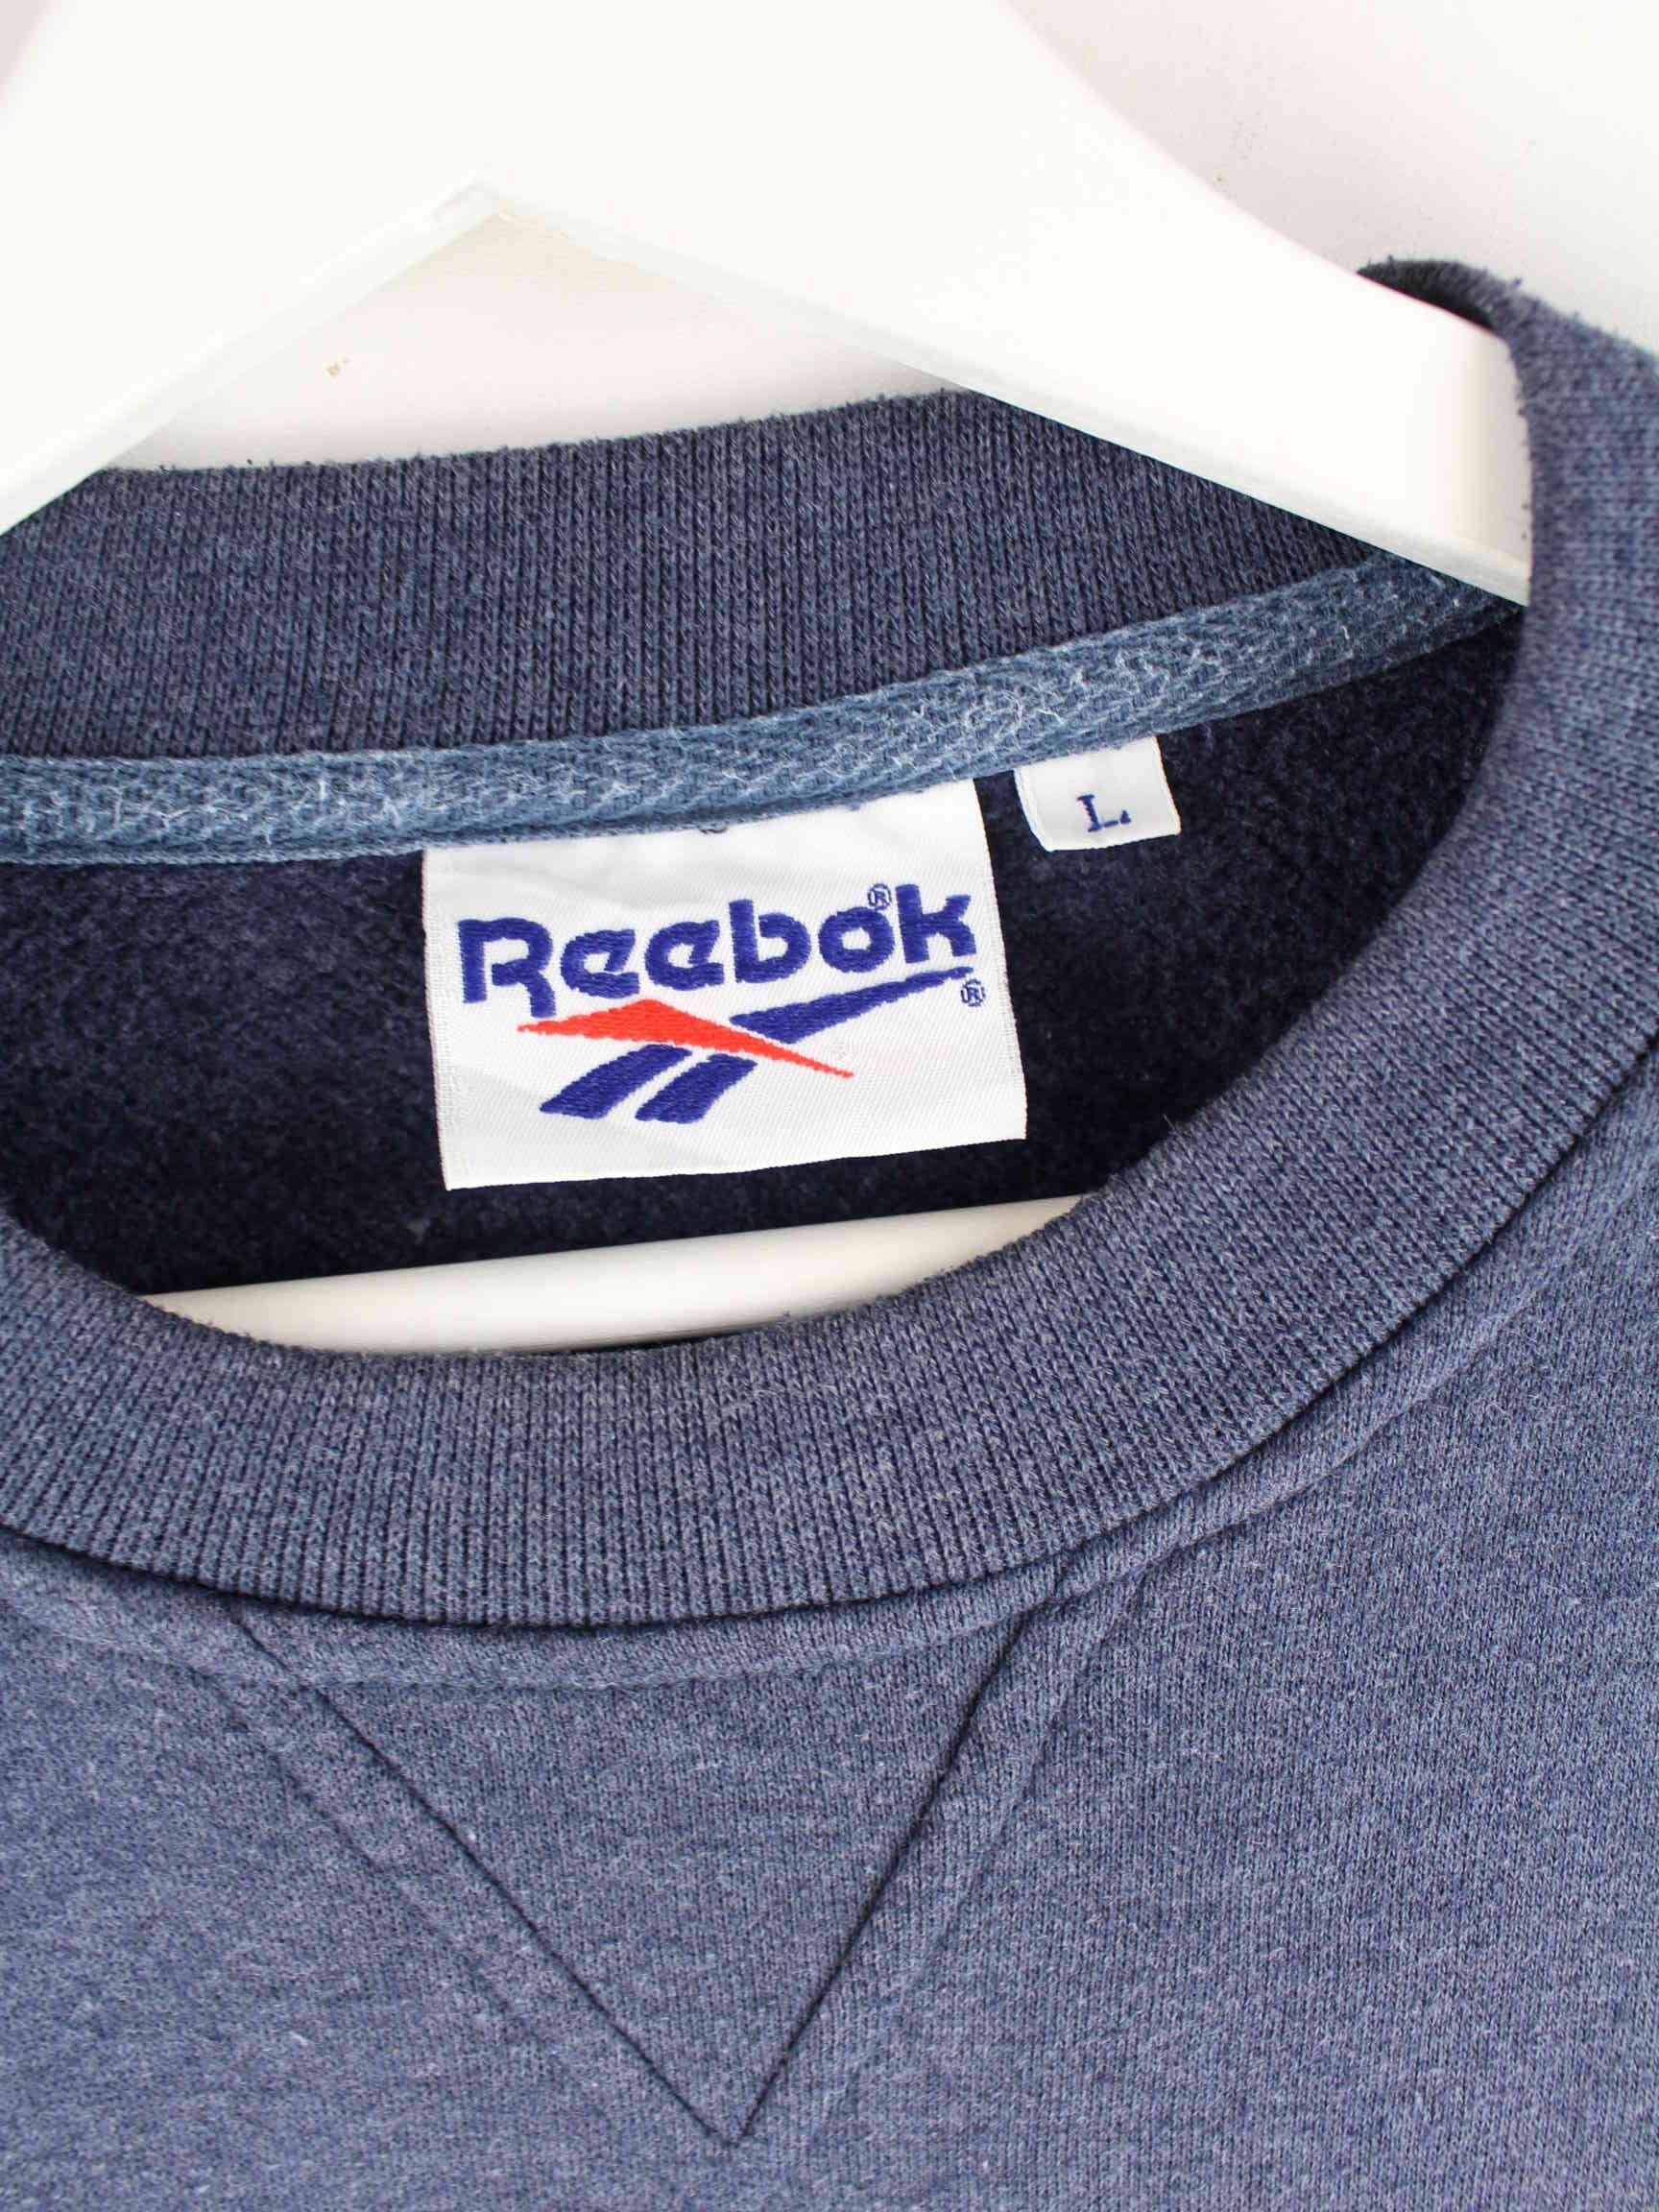 Reebok 90s Vintage Embroidered Sweater Blau L (detail image 2)